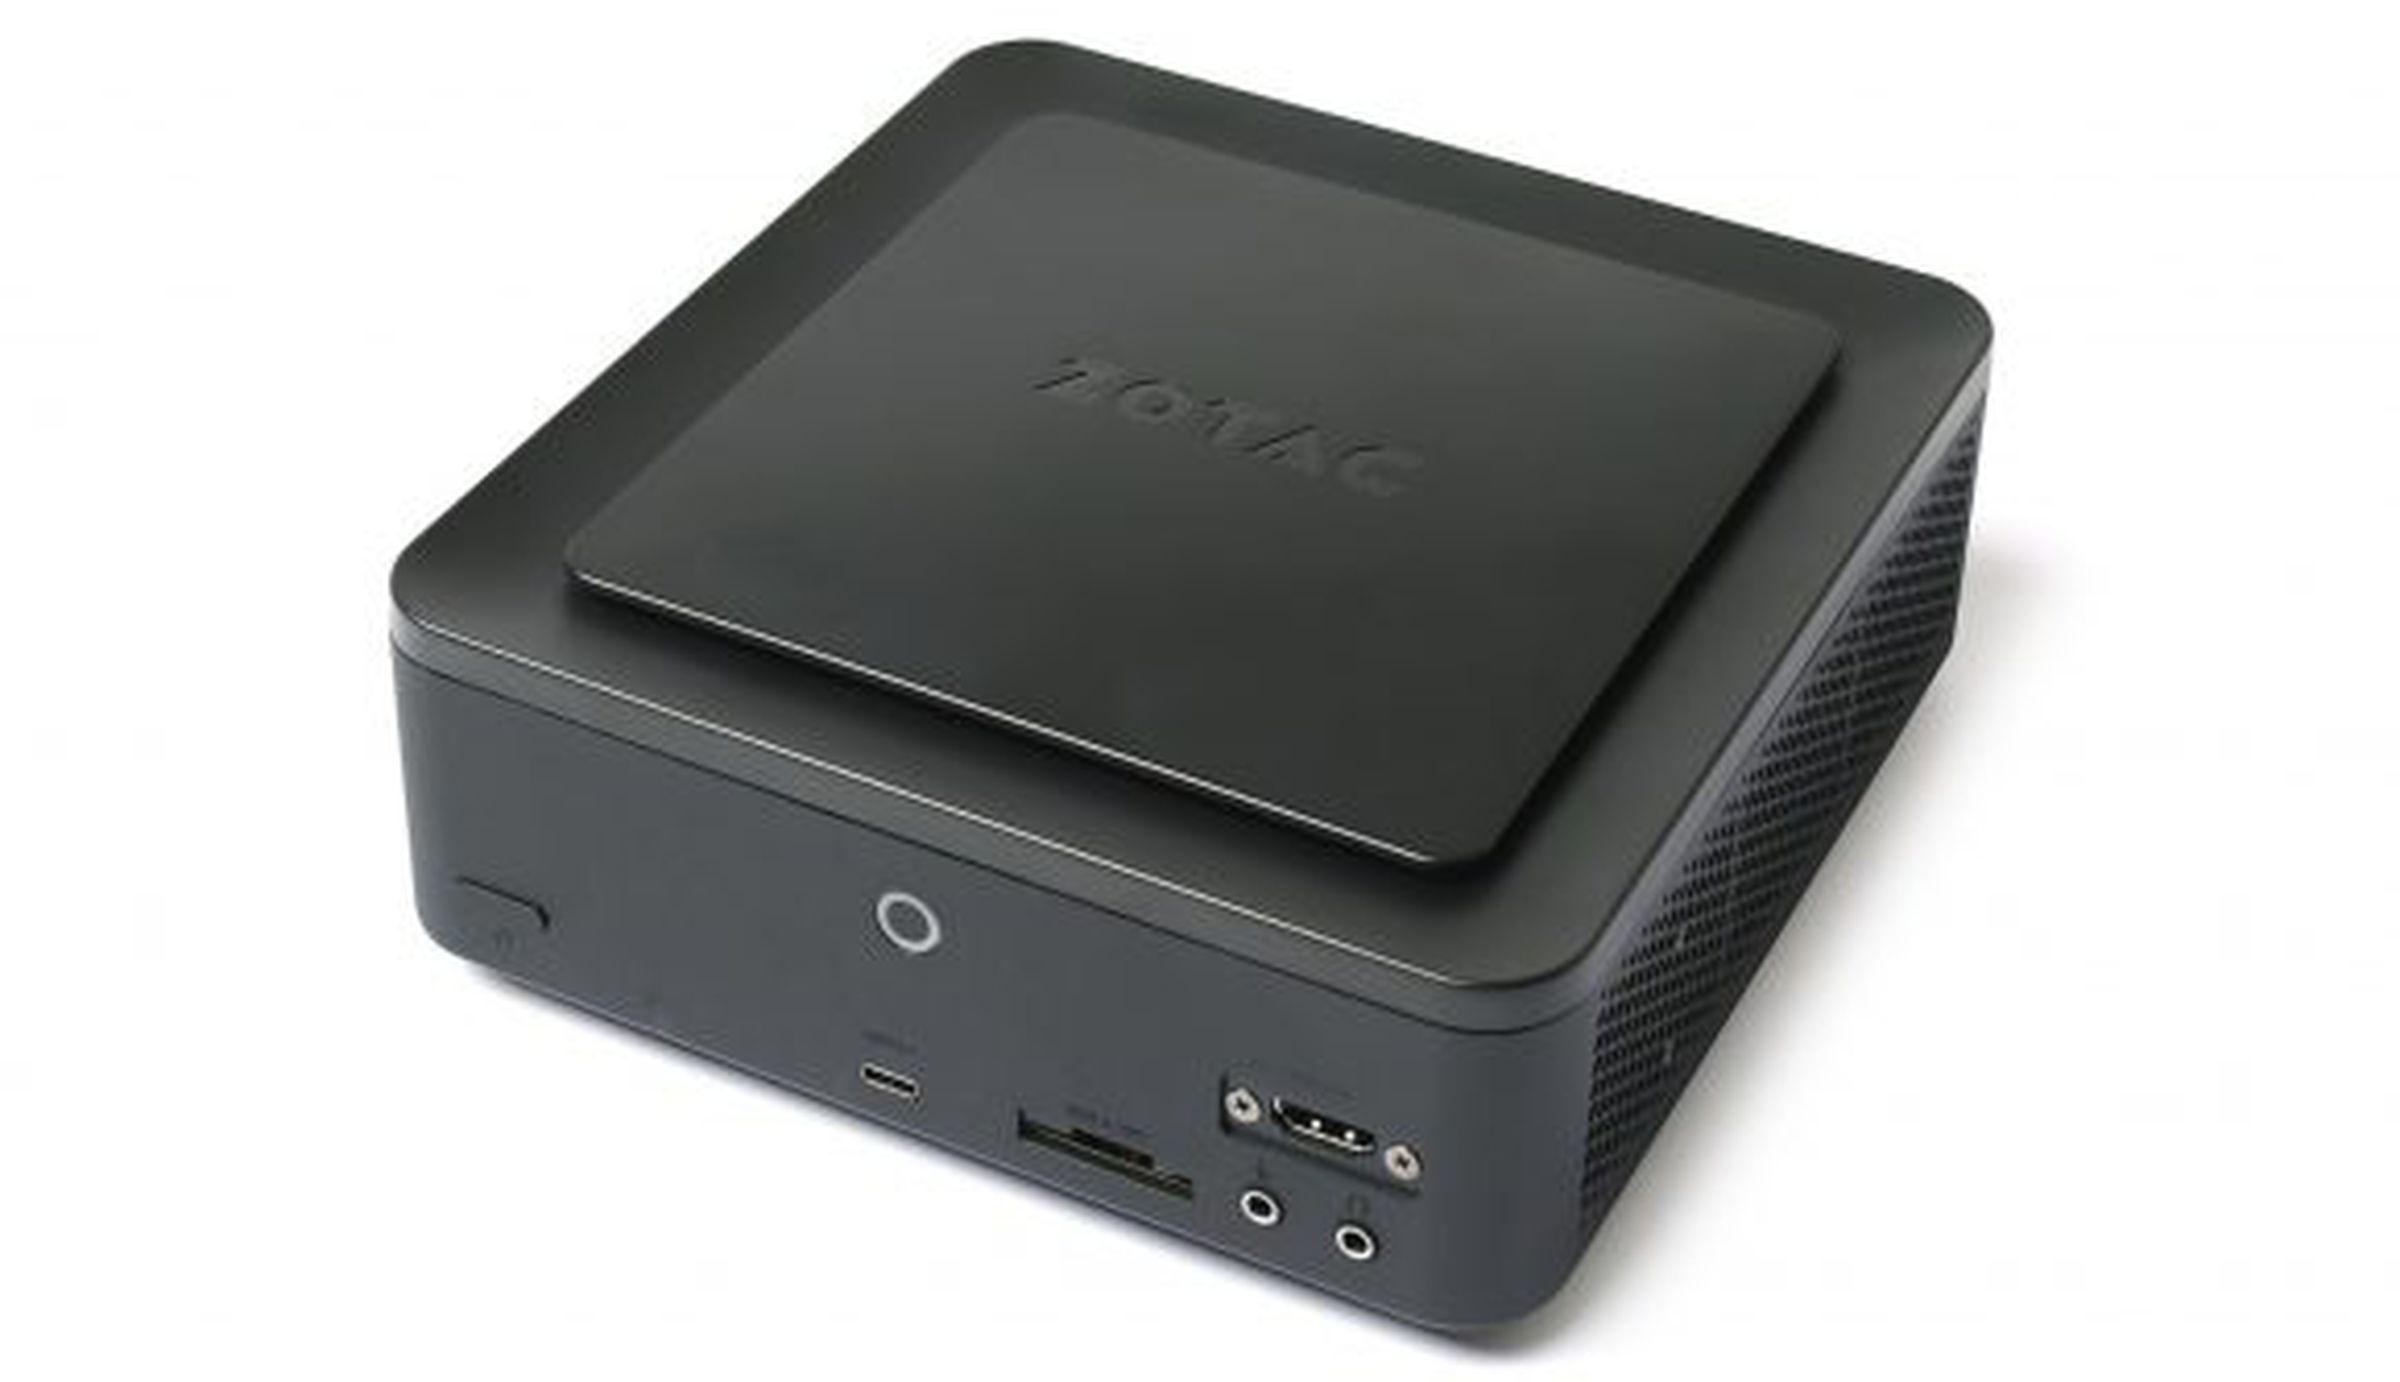 Zotac ZBOX MI553B mini desktop computer